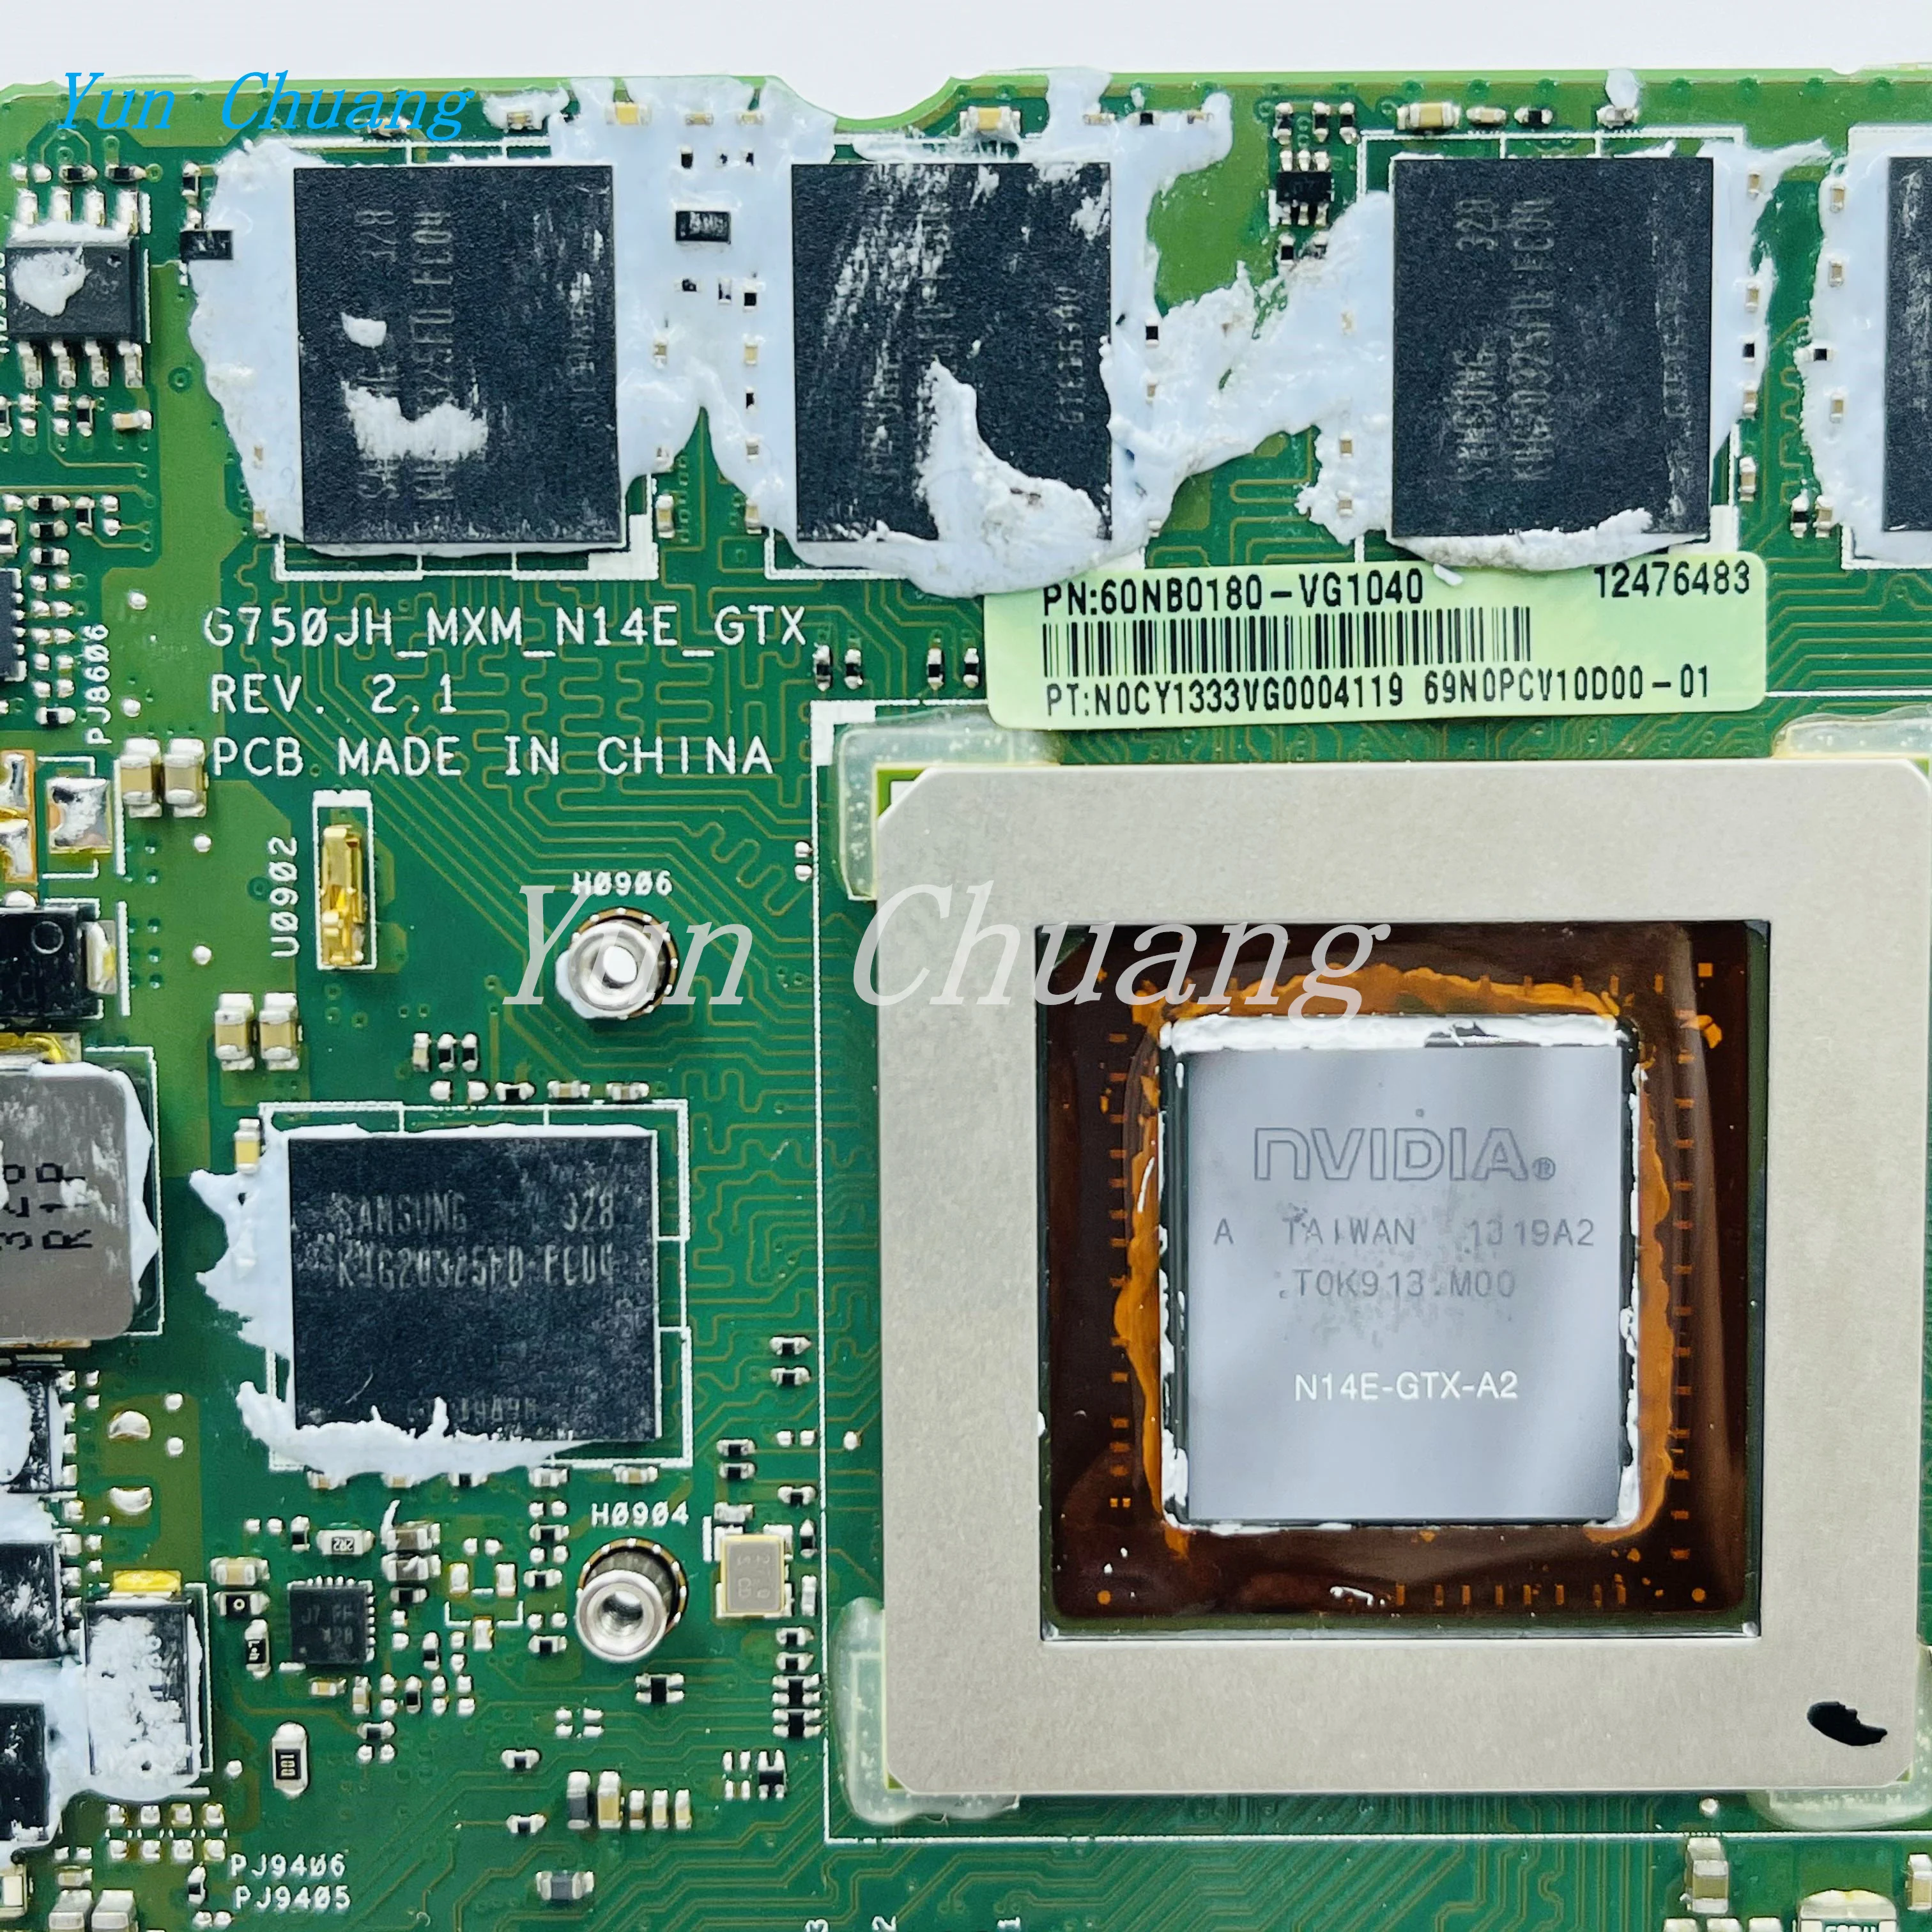 Лаптоп Asus ROG G750JH-BL карта G750J G750JH N14E-GTX-A2 GeForce GTX 780M 4 GB VGA Графична карта Видеокарта 60NB0180-VG10402